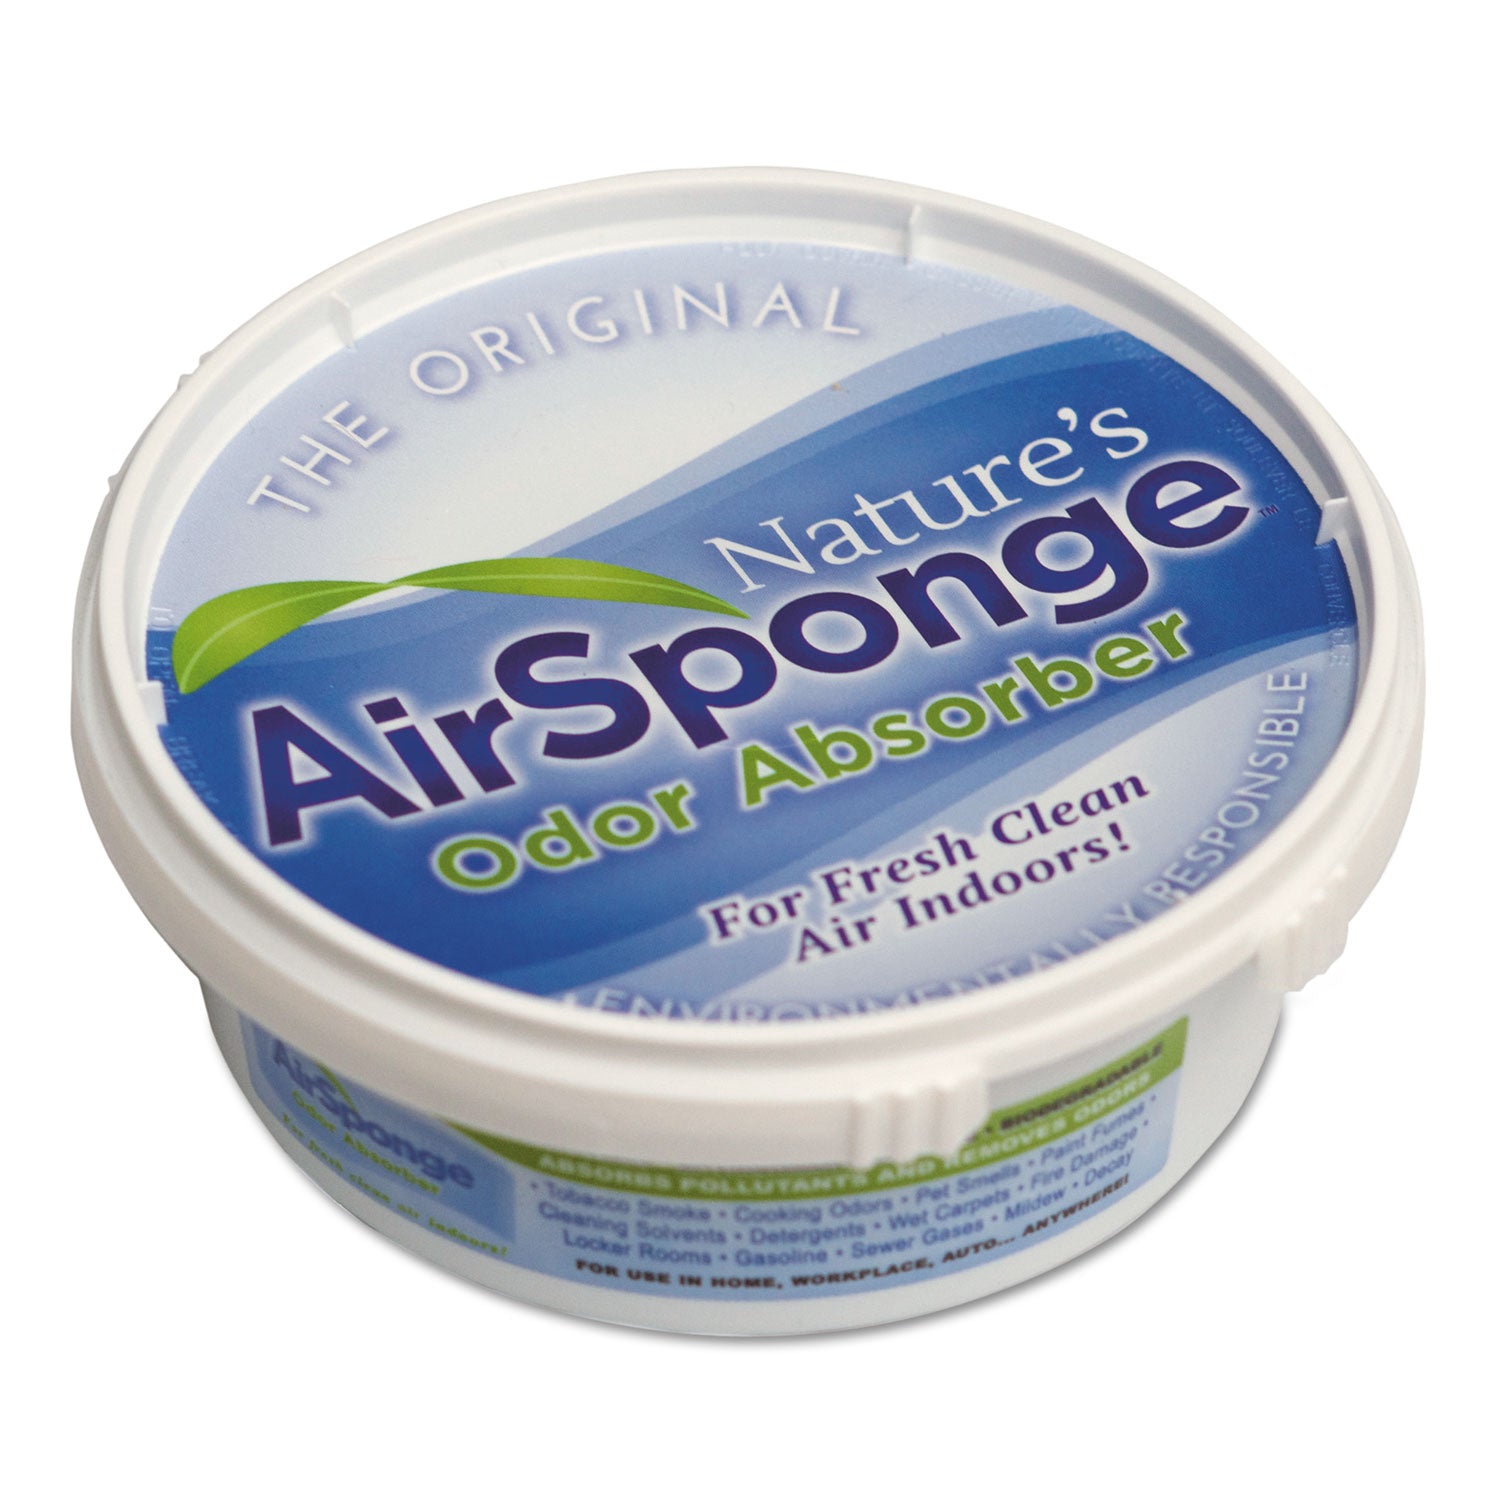 Sponge Odor Absorber, Neutral, 0.5 lb Cup - 